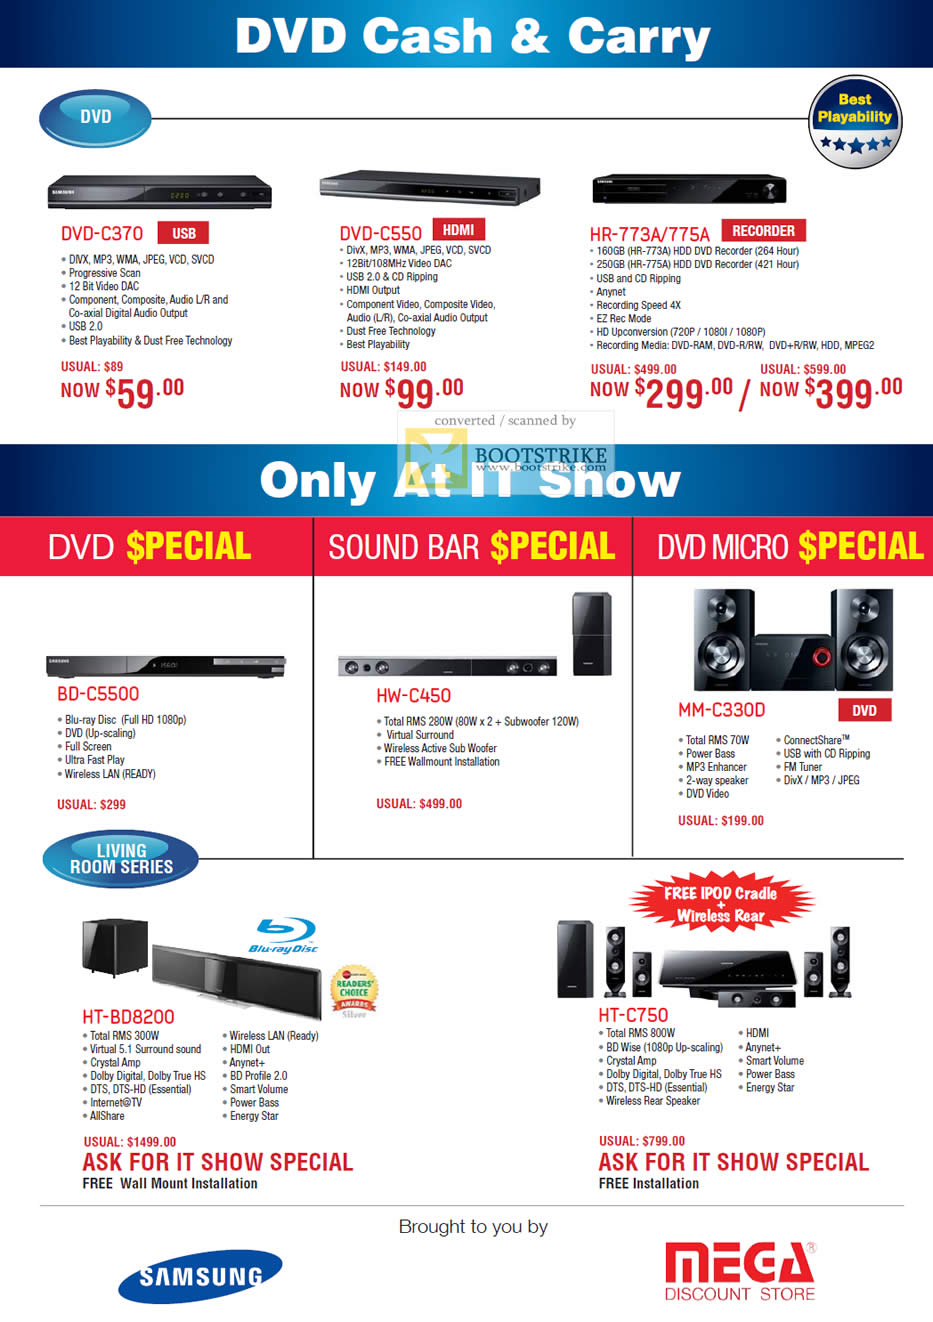 IT Show 2011 price list image brochure of Mega Discount Samsung DVD Players DVD-C370 DVD-C550 HR-733A 775A BD-C5500 HW-C450 MM-C330D HT-BD82200 HT-C750 Home Theater Hifi